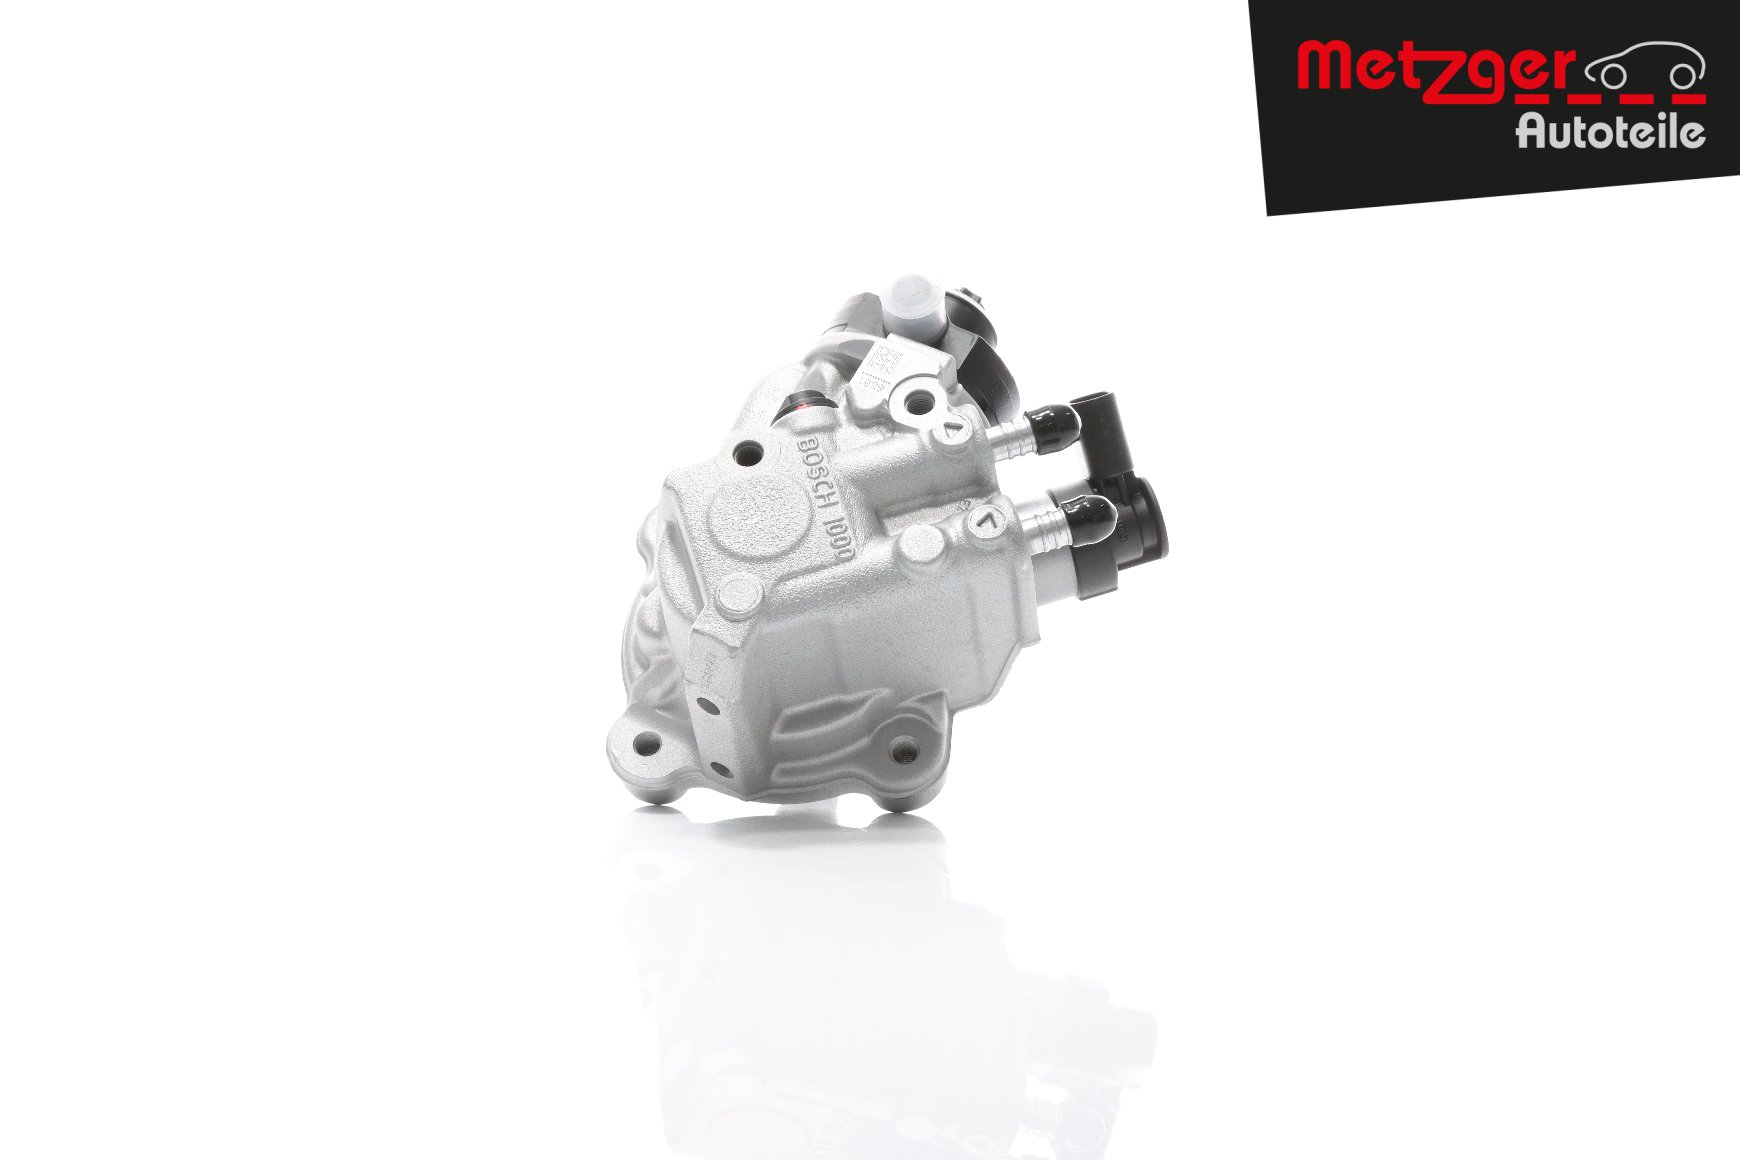 METZGER 0830086 High pressure fuel pump 03L 130 755 F